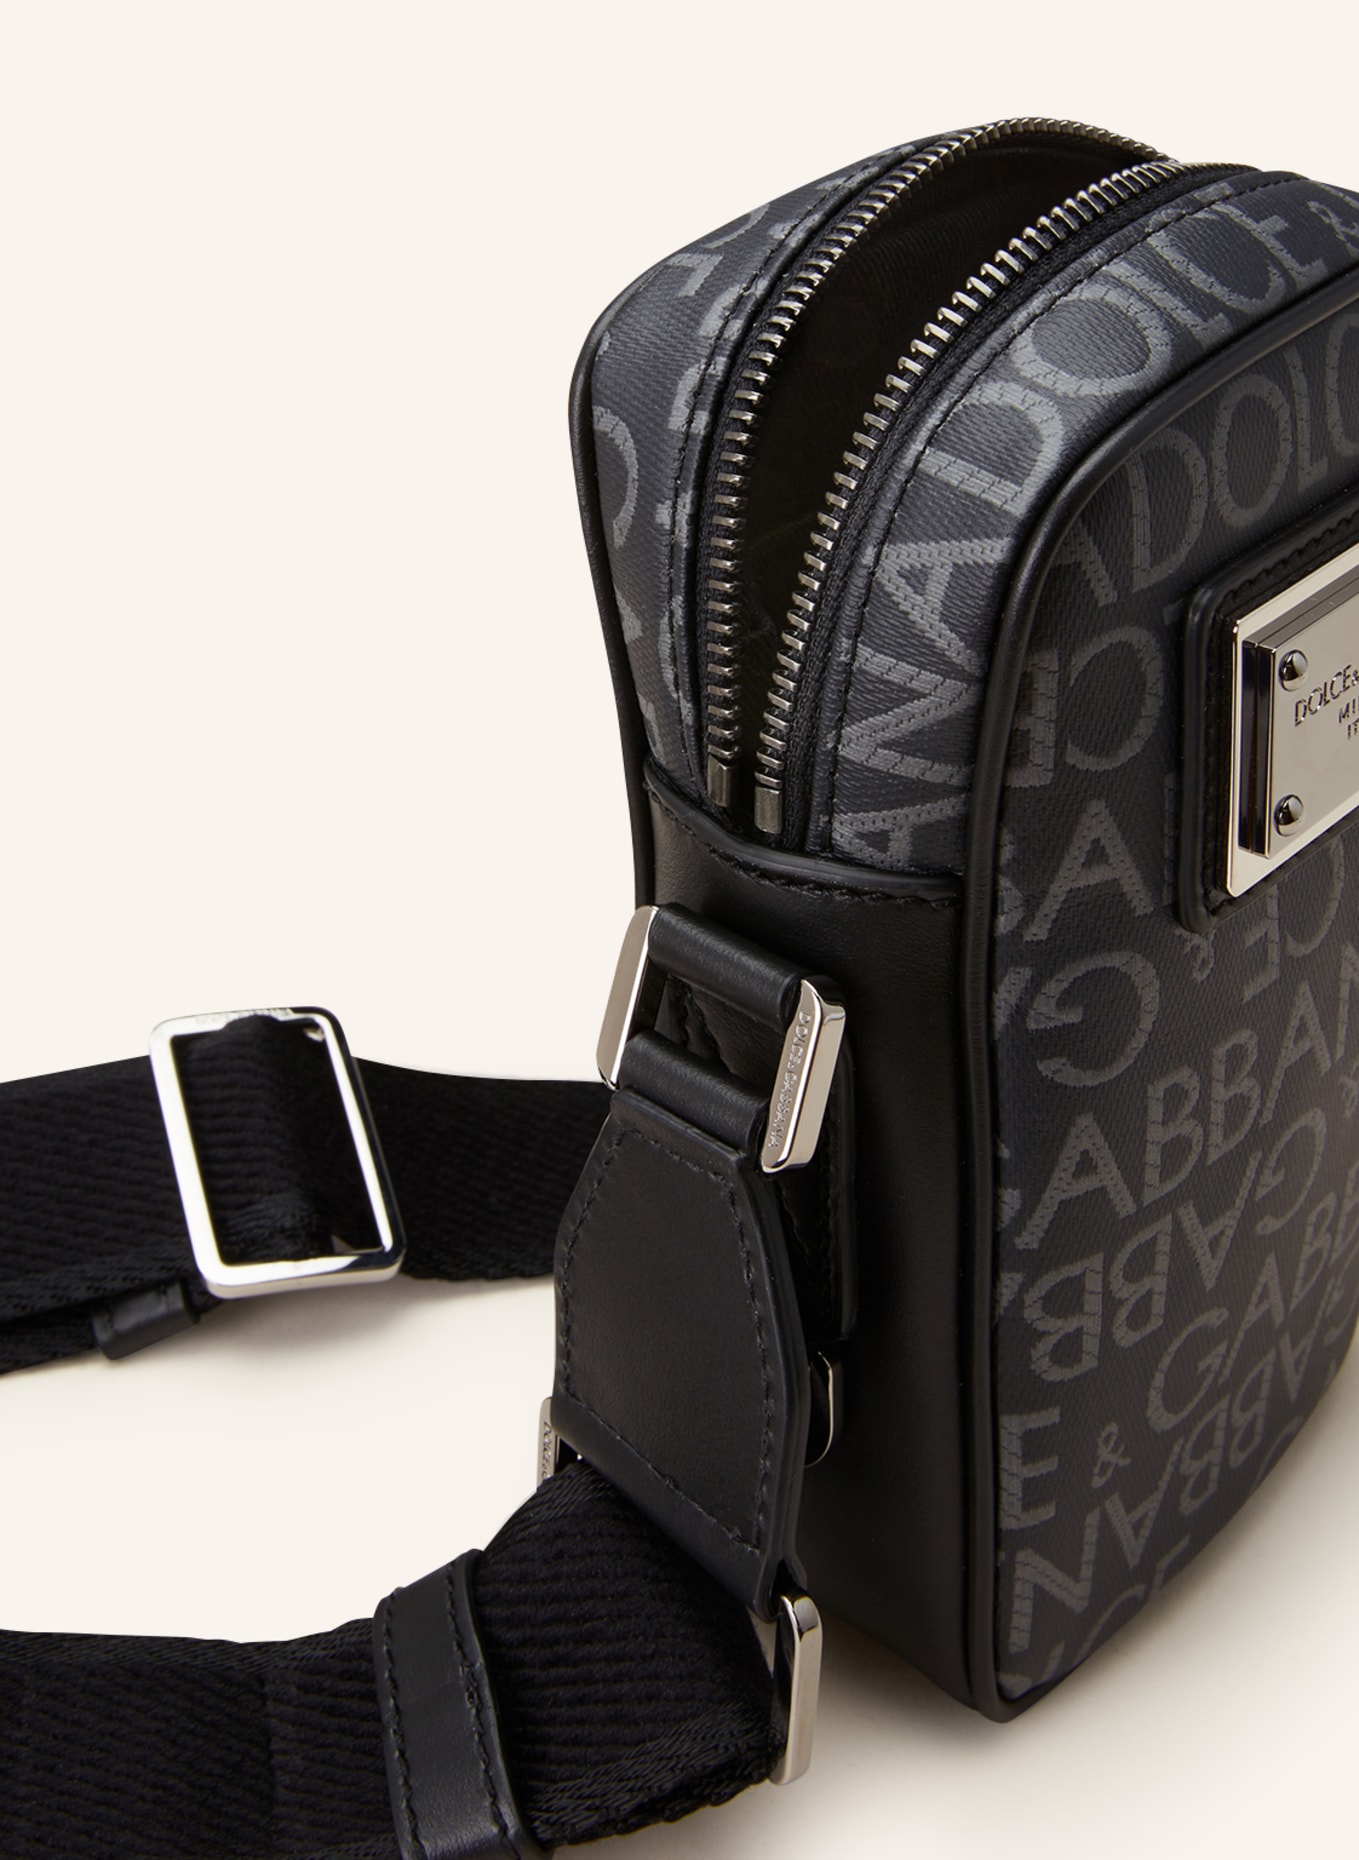 Dolce & Gabbana Small Crossbody Bag in Black for Men